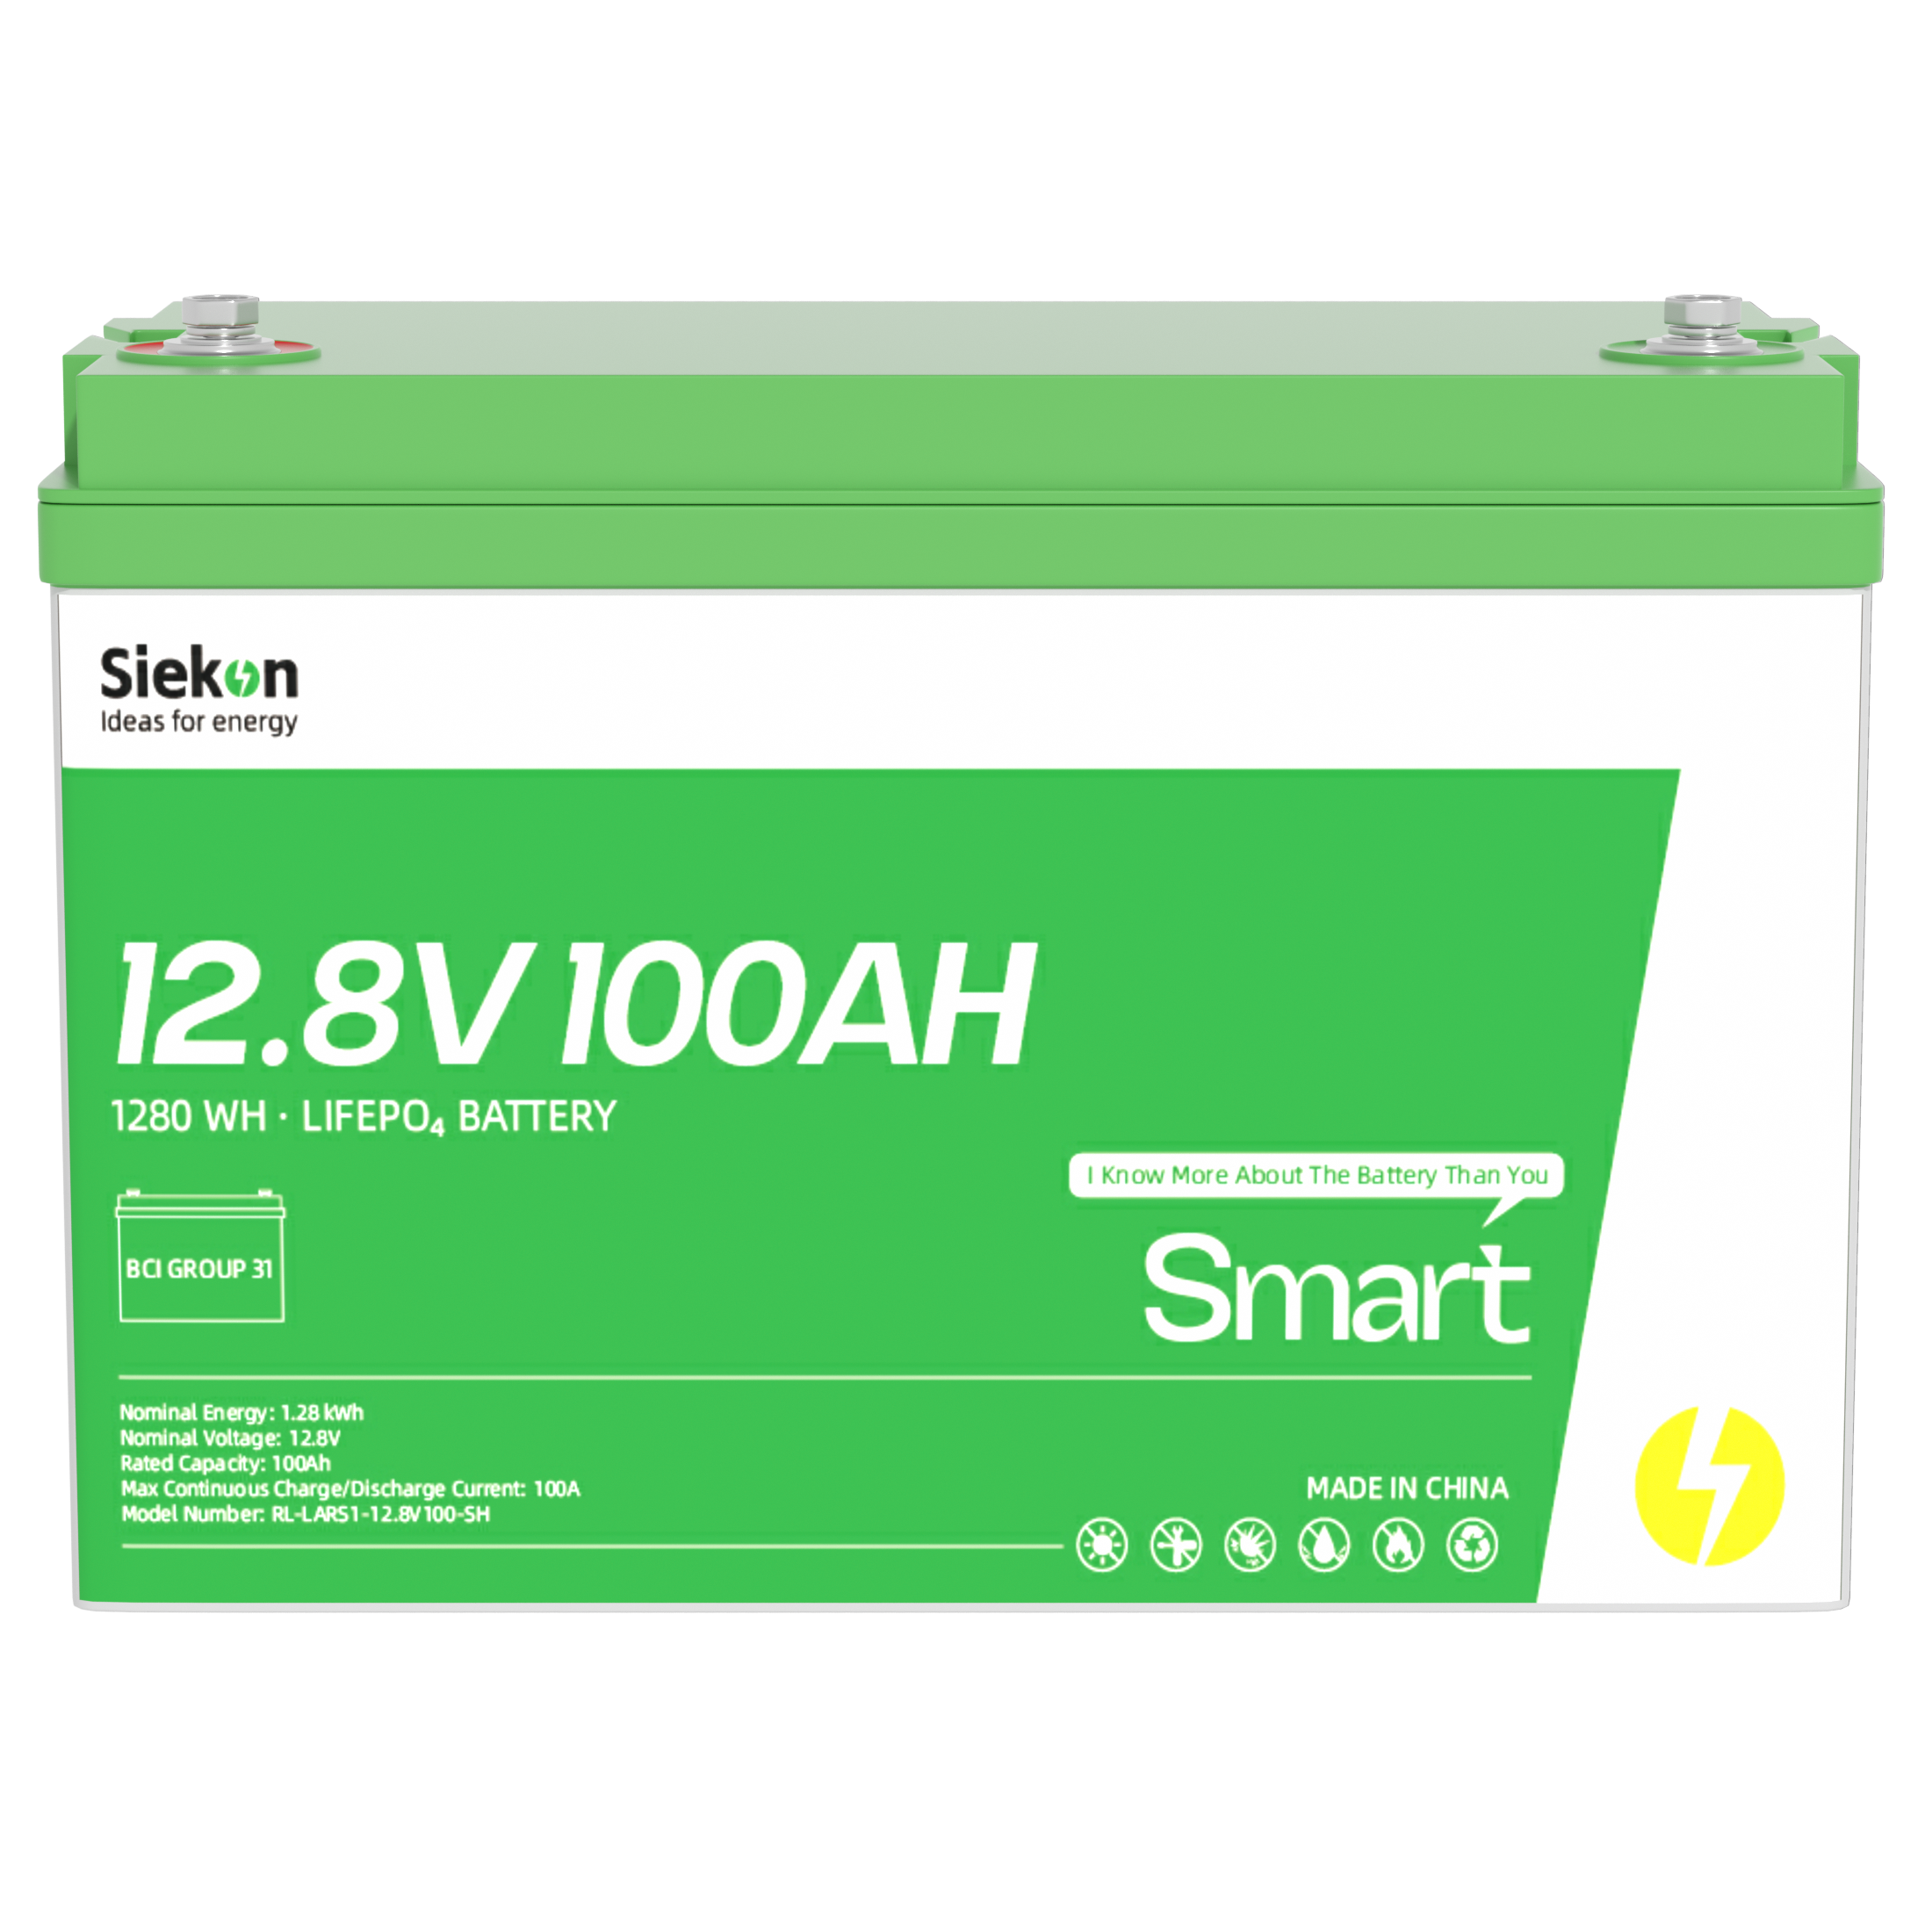 Siekon 12V 100Ah LiFePO4 battery | Smart